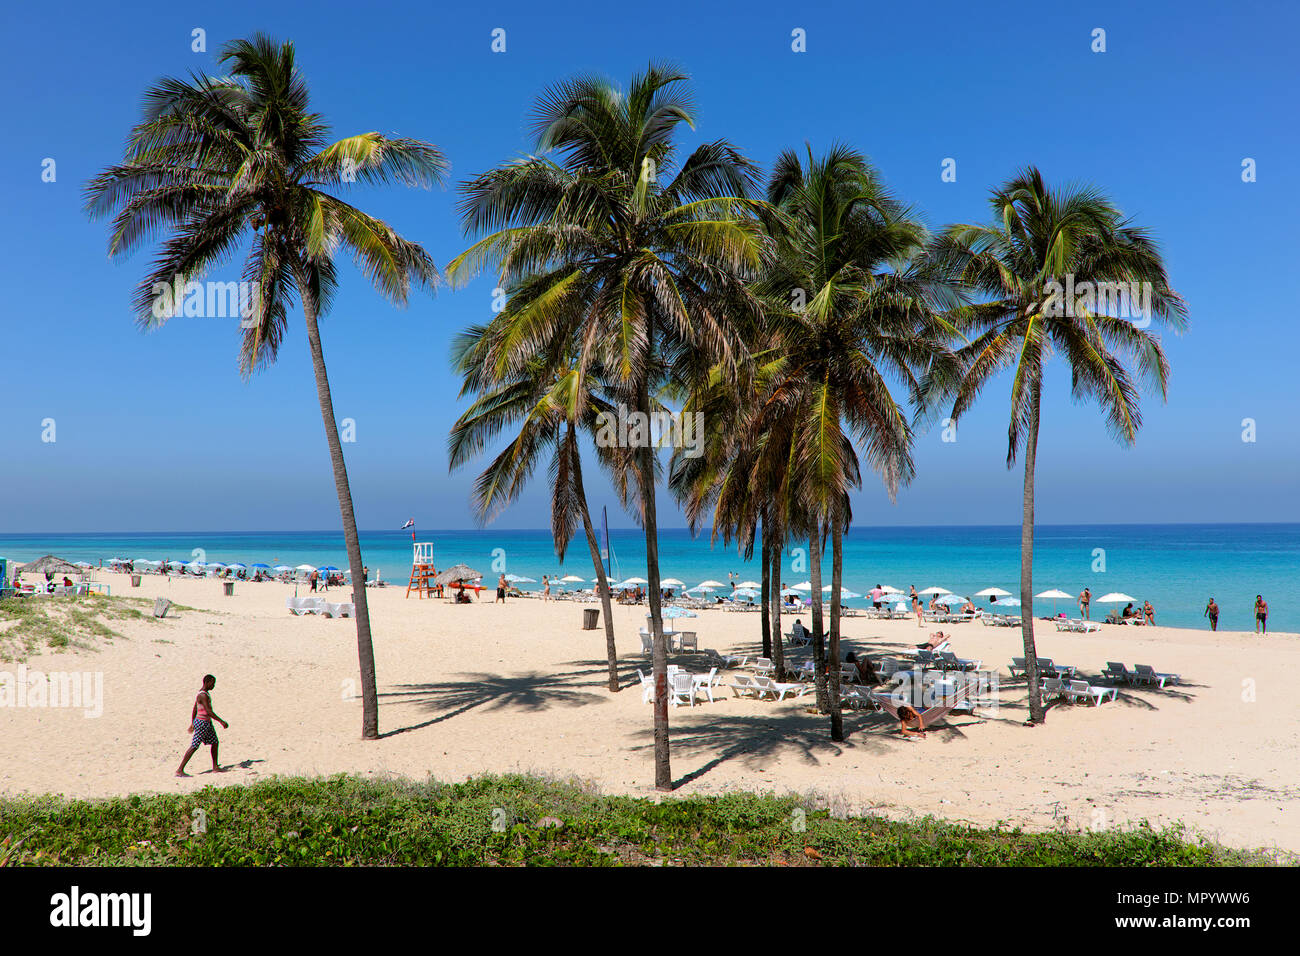 Playas del Este beach - Santa Maria del Mar, Habana del Este / East of Havana, Cuba, Caribbean Stock Photo